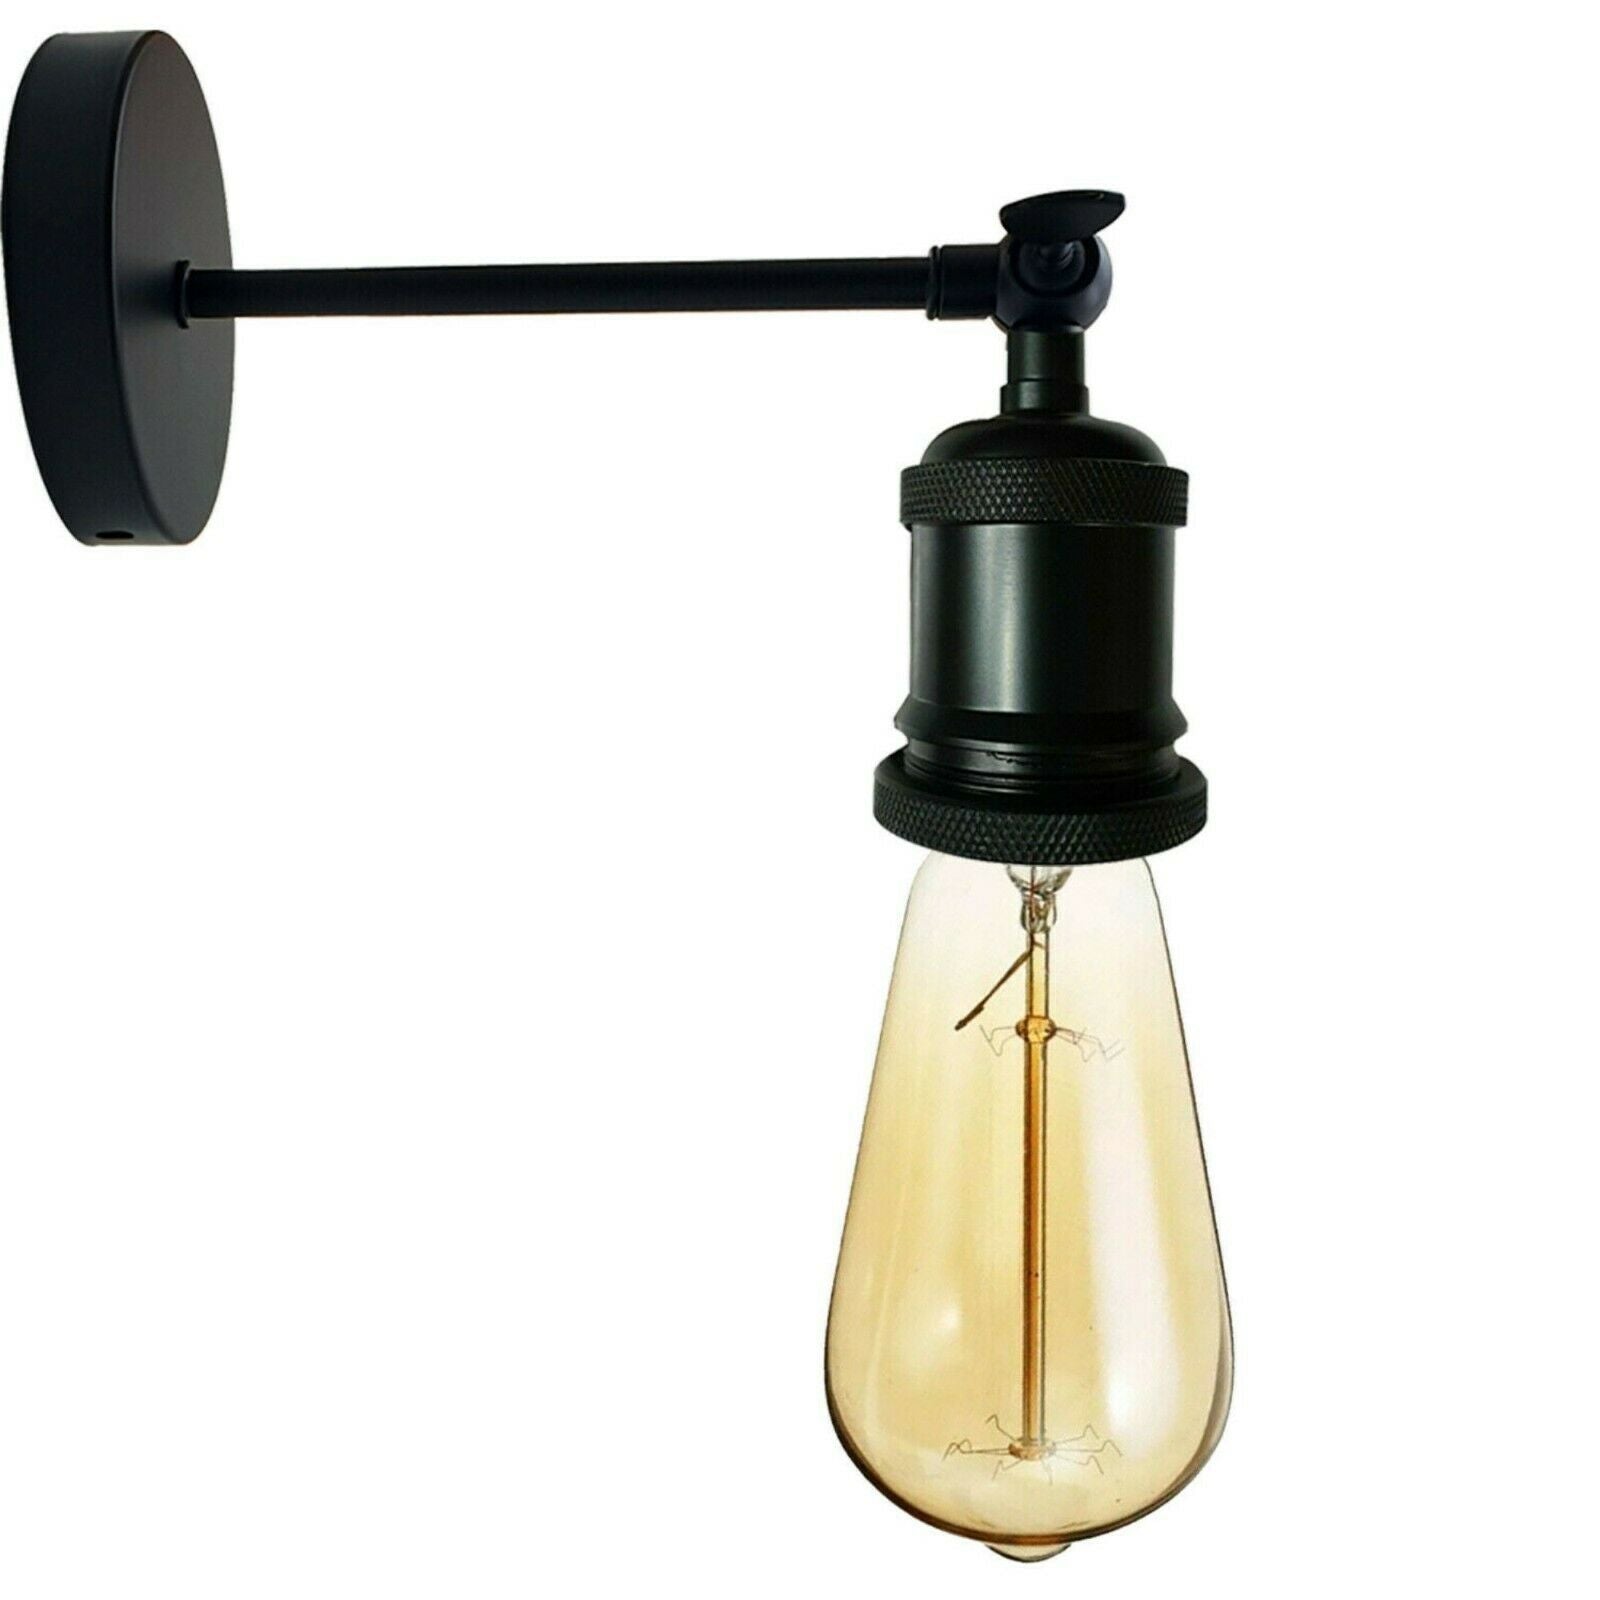 Industrial Retro Adjustable Wall Lights Vintage Style Sconce Lamp Fitting Kit UK~2246 - LEDSone UK Ltd